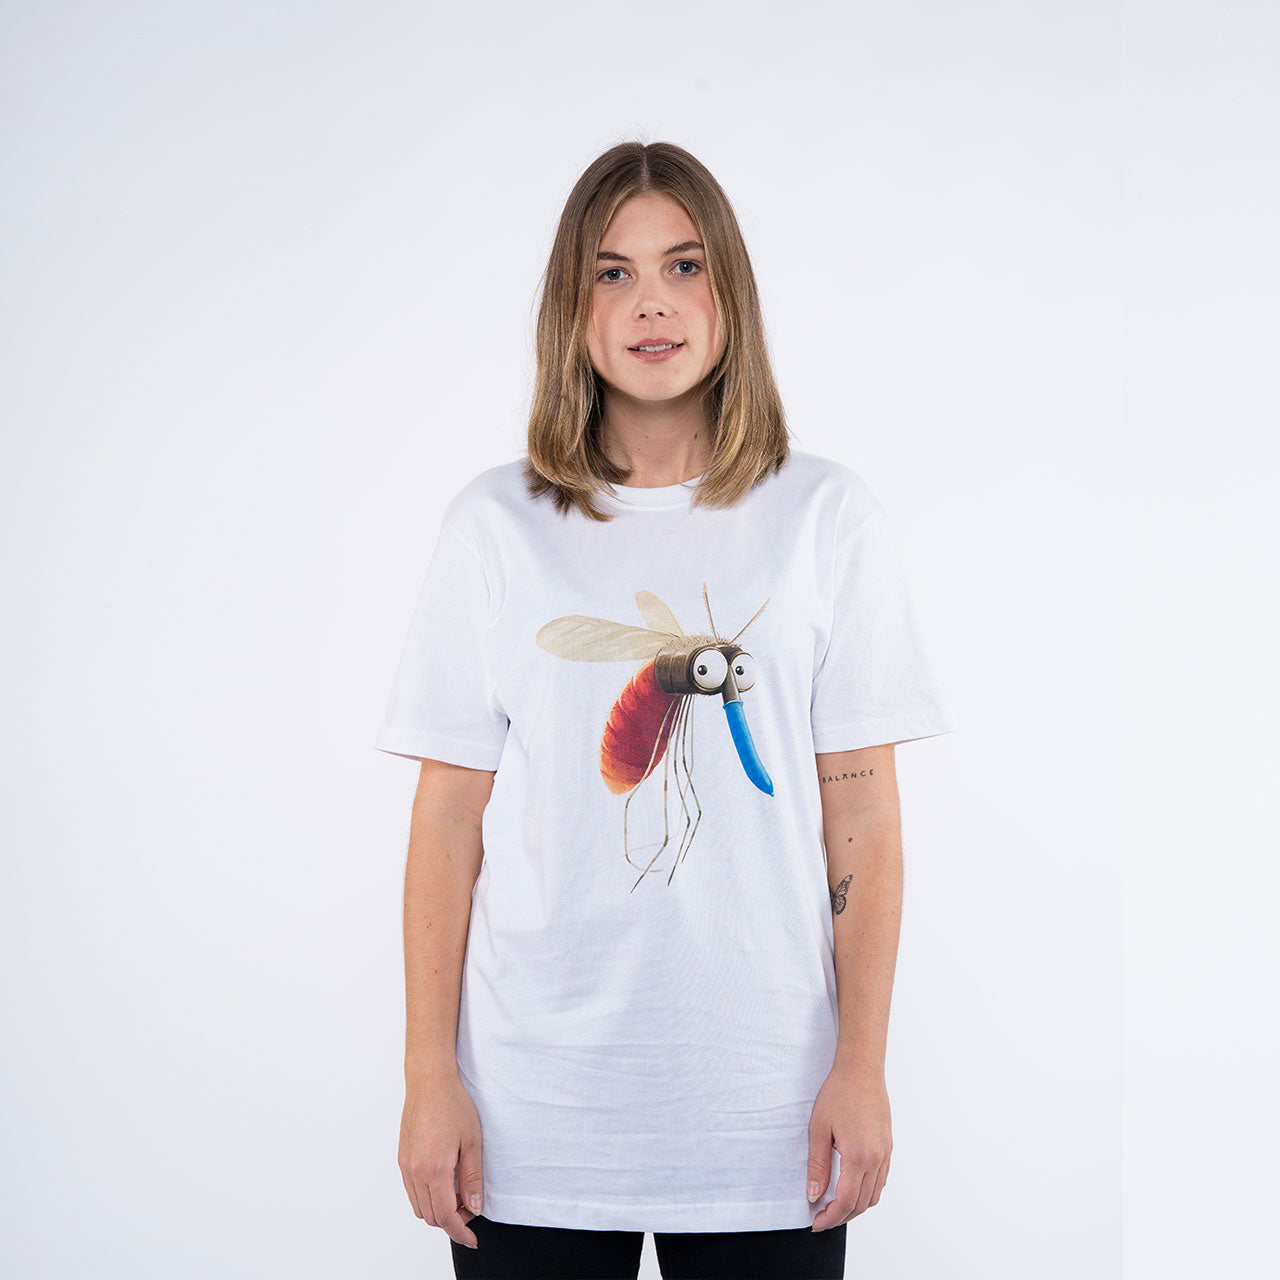 Neelix - Mosquito T-Shirt